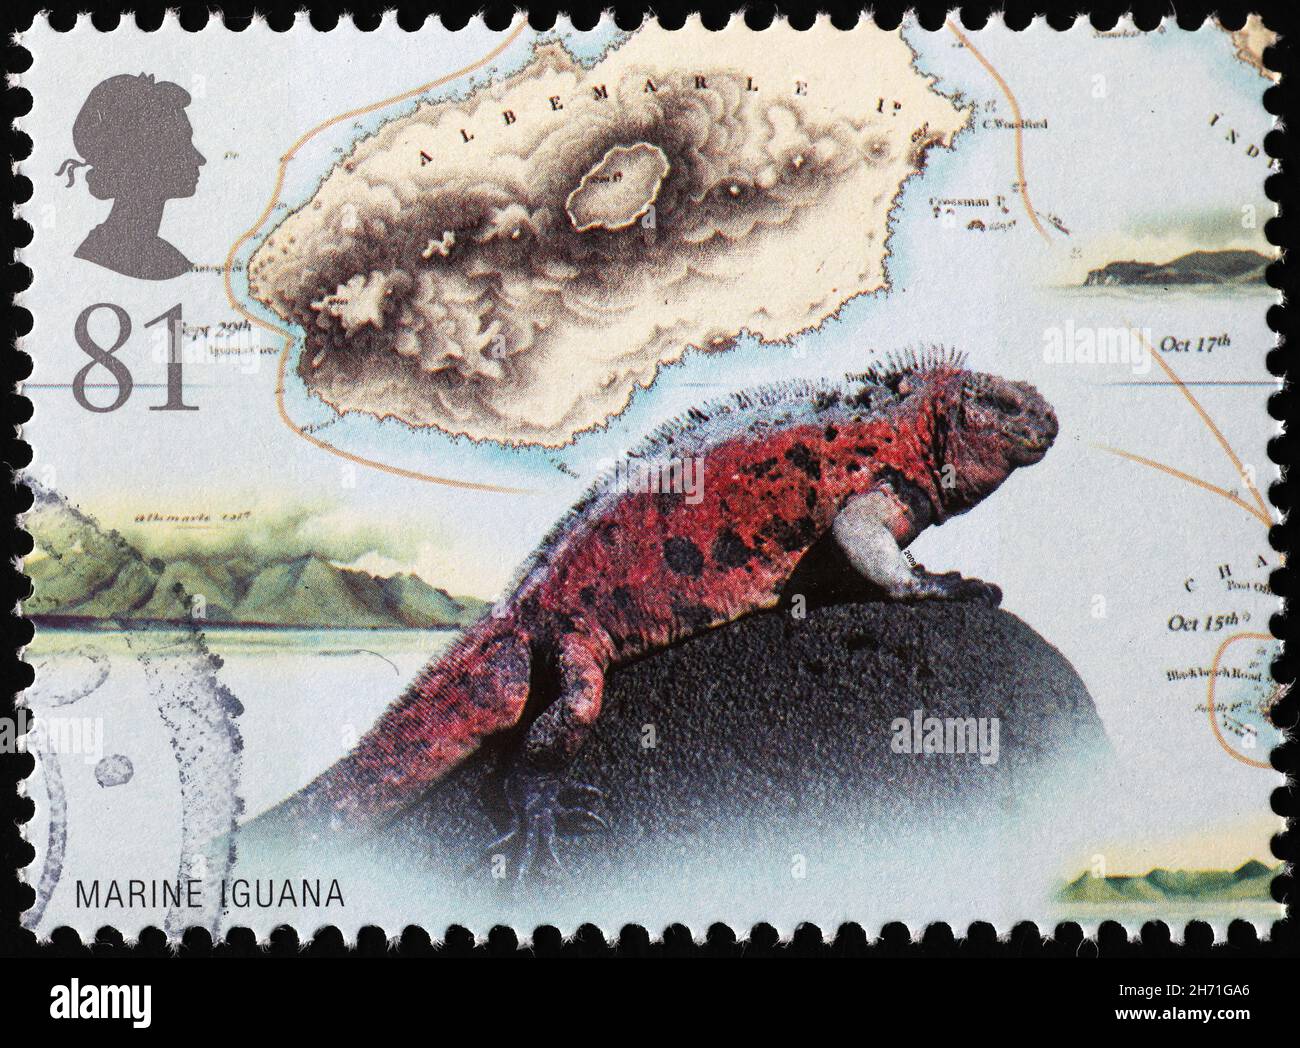 Iguana marina su francobollo delle isole Galapagos Foto Stock